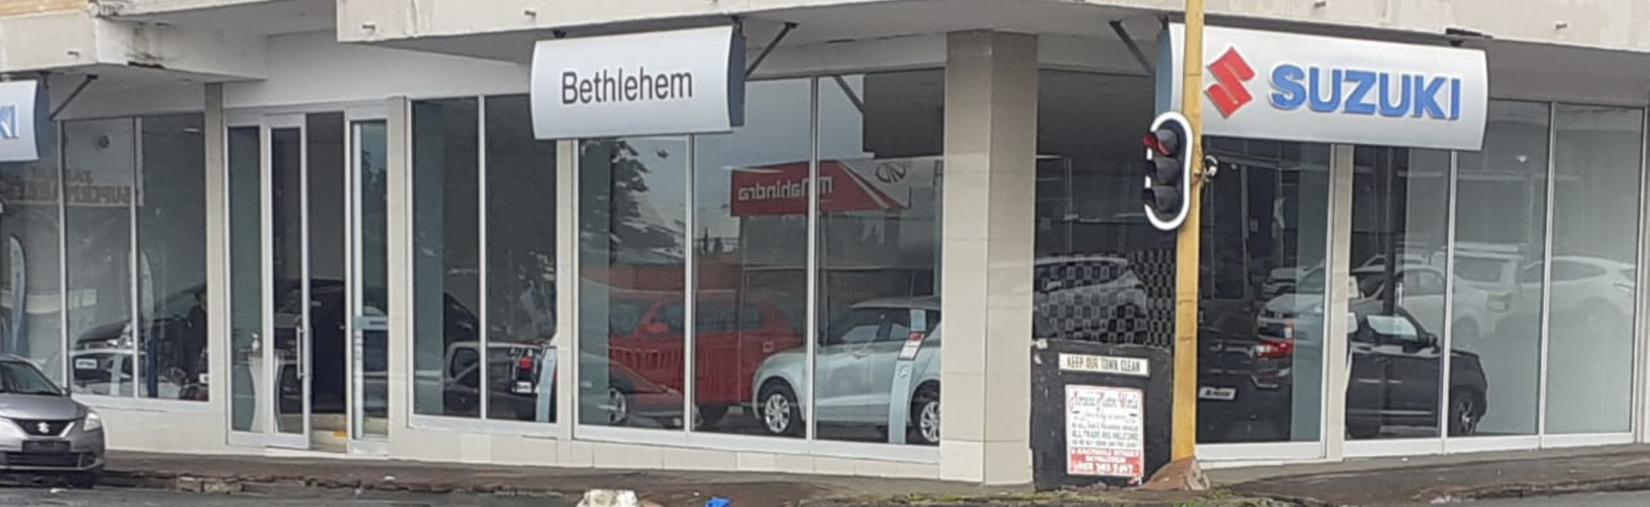 The Suzuki Dealership in Bethlehem.